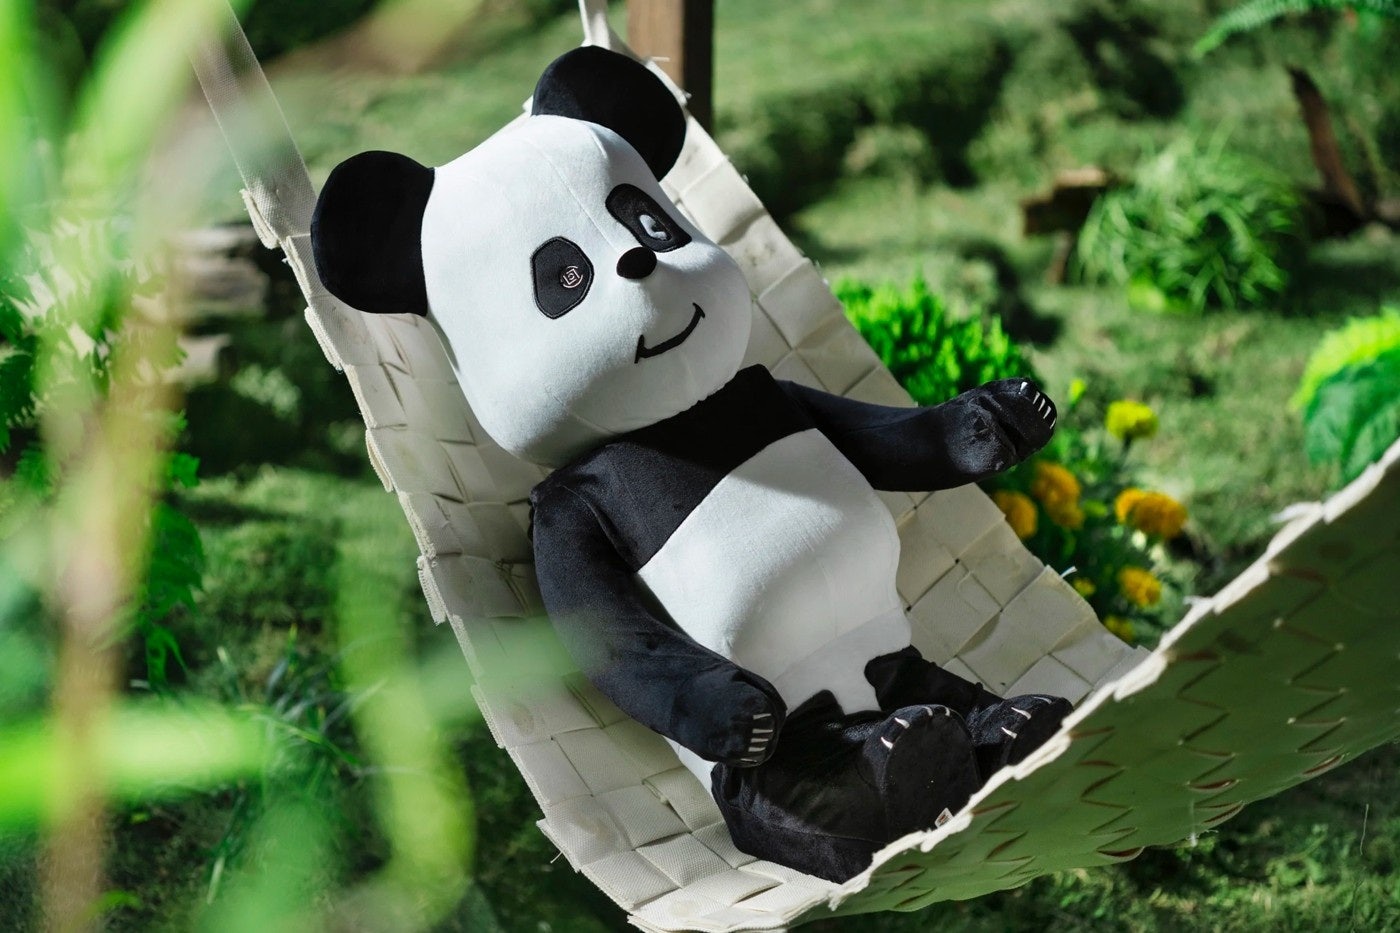 The Clot x Medicom Toy Be@rbrick Panda is part of Clot's month-long Panda campaign. Photo: Clot